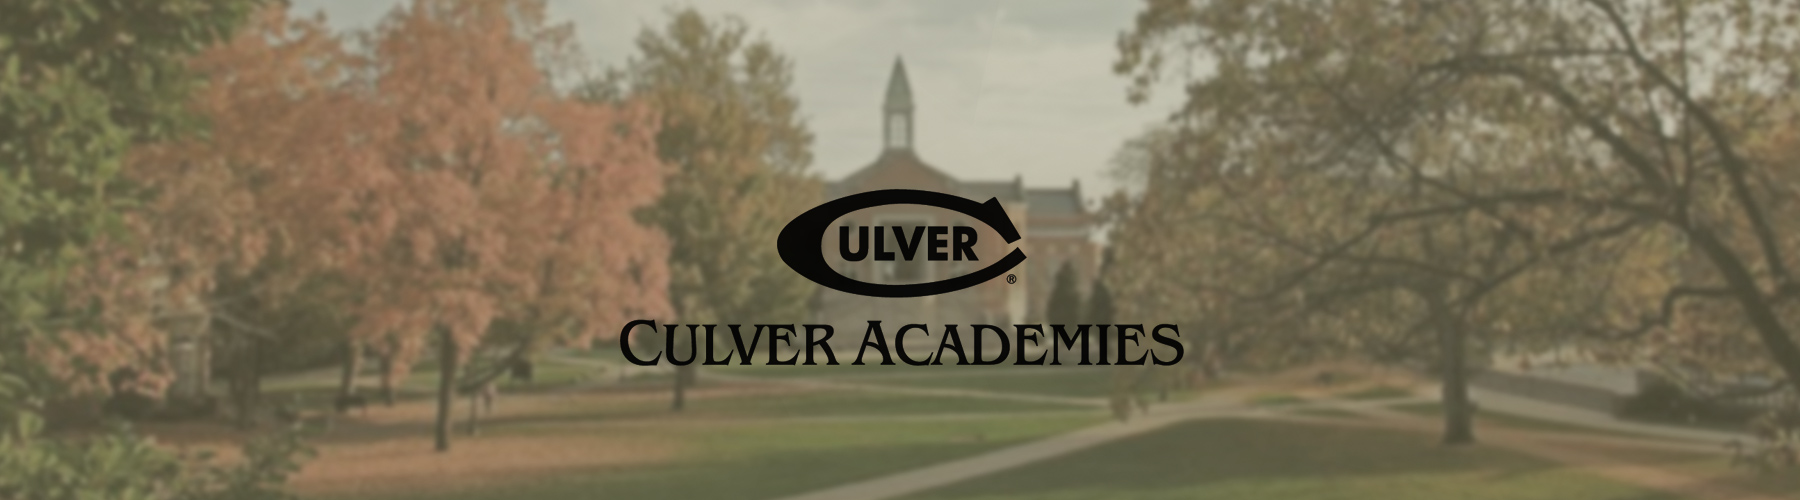 client-visit-to-culver-academies-westwerk